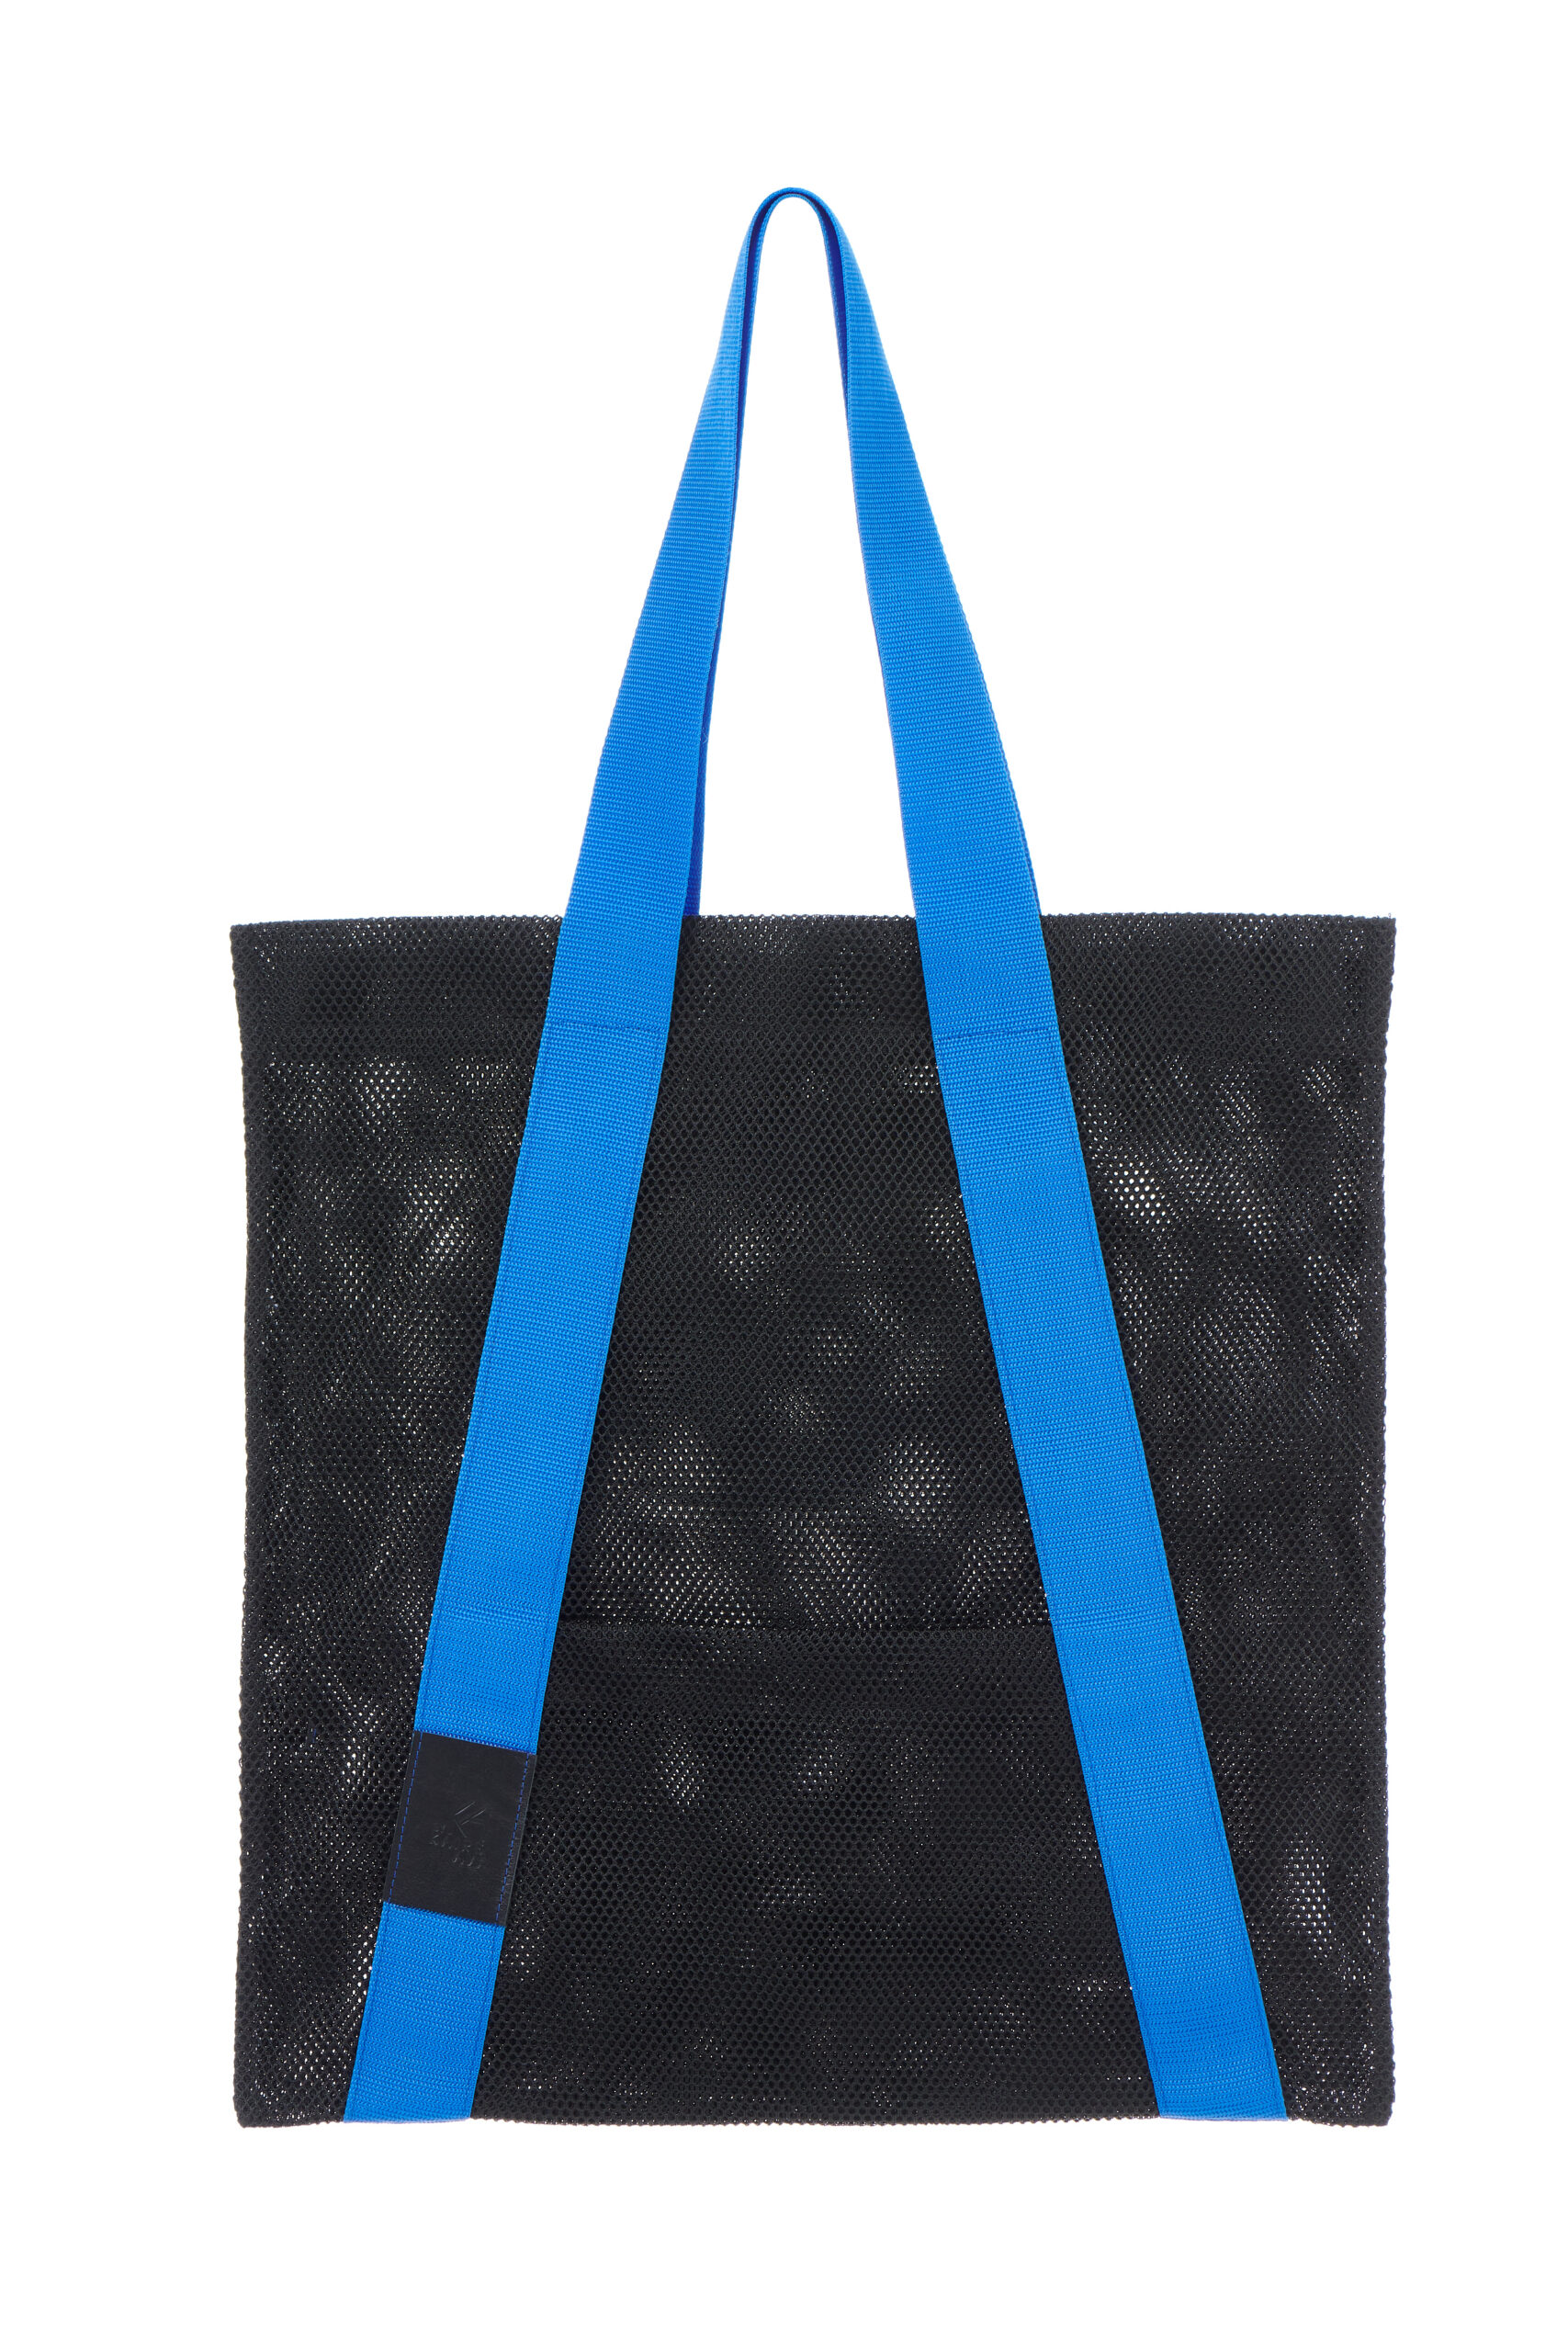 Poekott “Hanna” sinine rihm / Tote bag “Hanna” black, blue straps